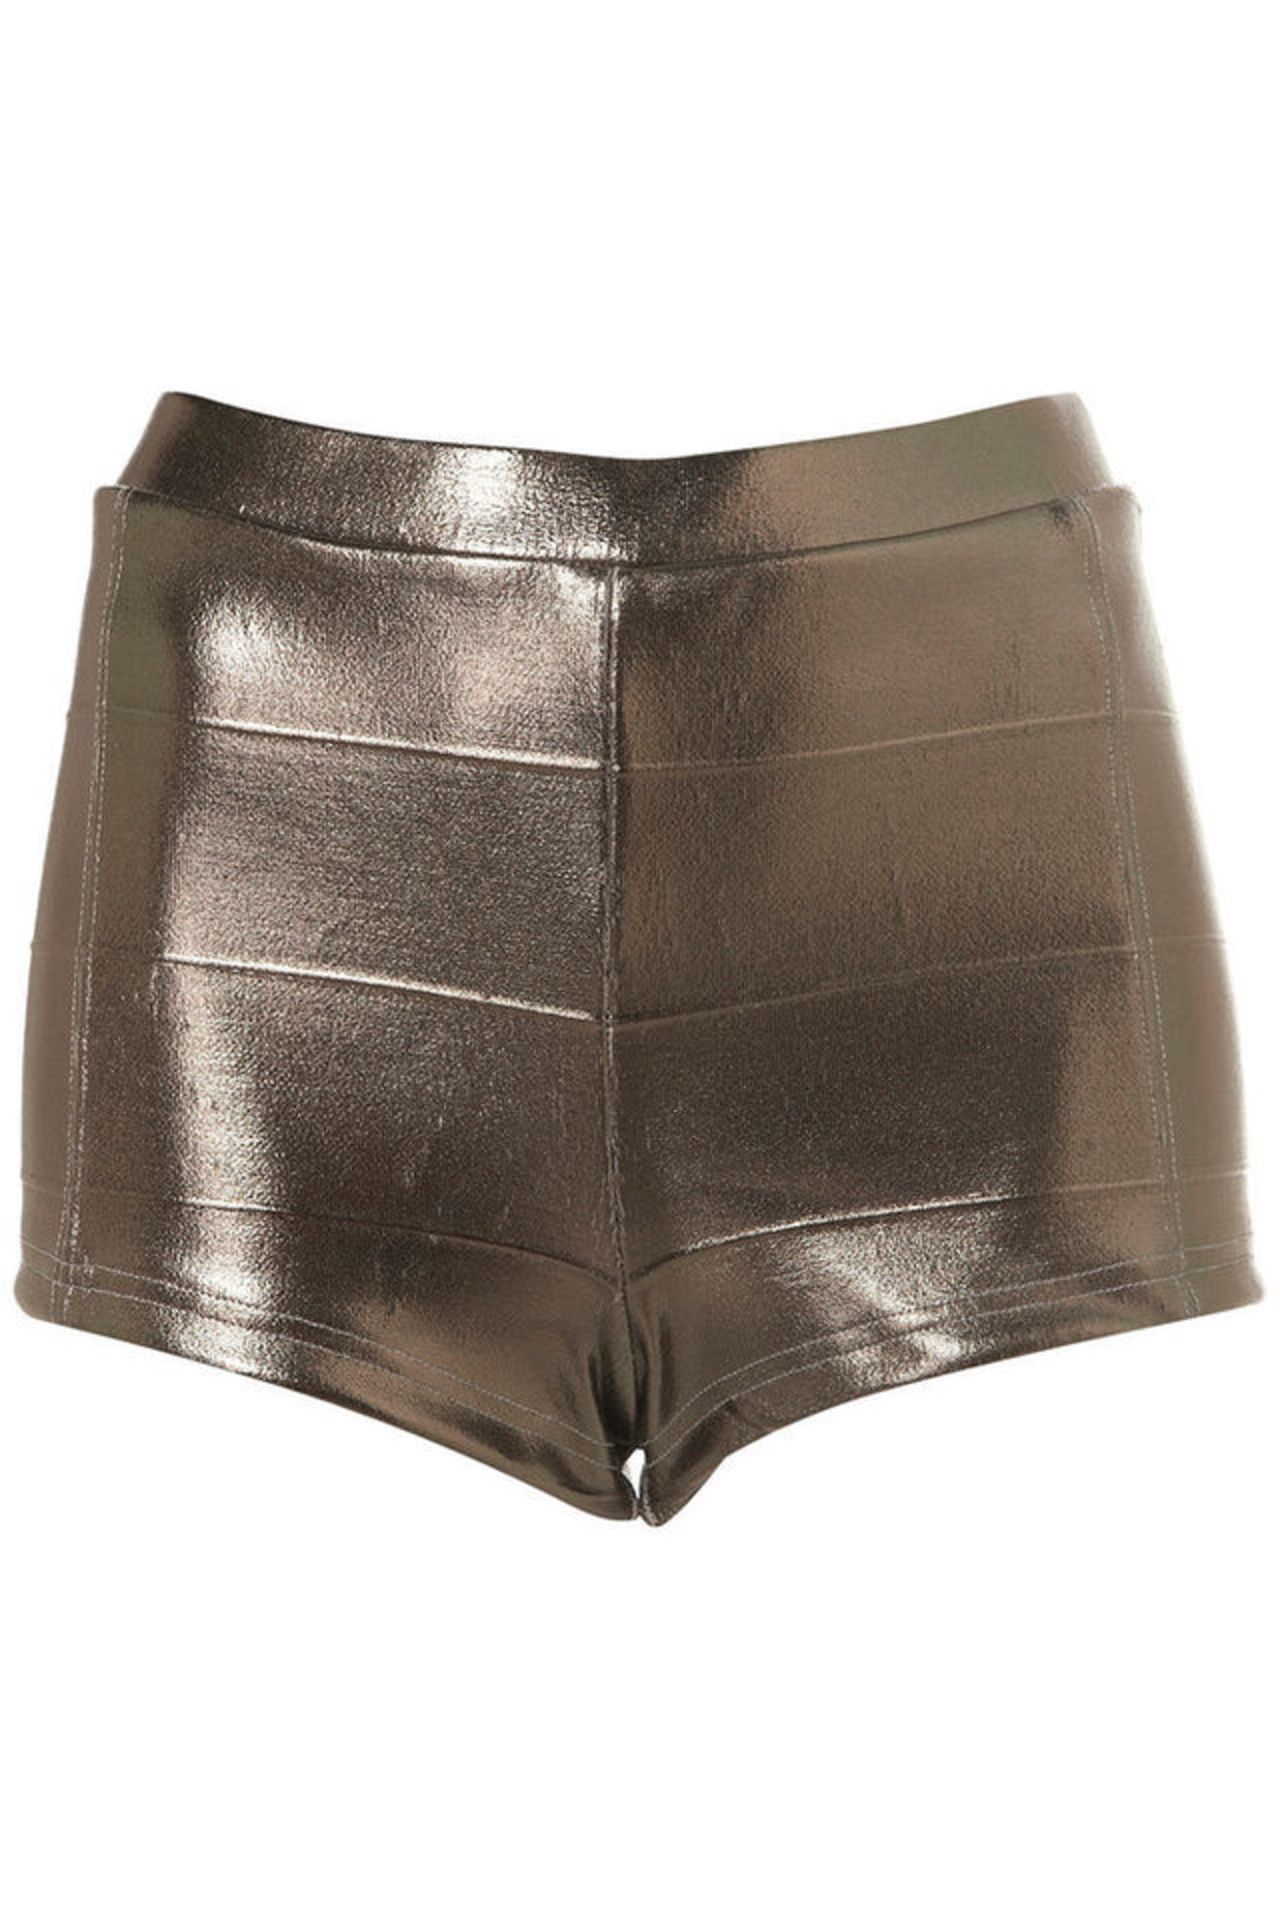 New Tags In Bags Topshop Ladies Khaki Foil Knickers Hot Pants Shorts x 36 RRP £726 - Bild 3 aus 3